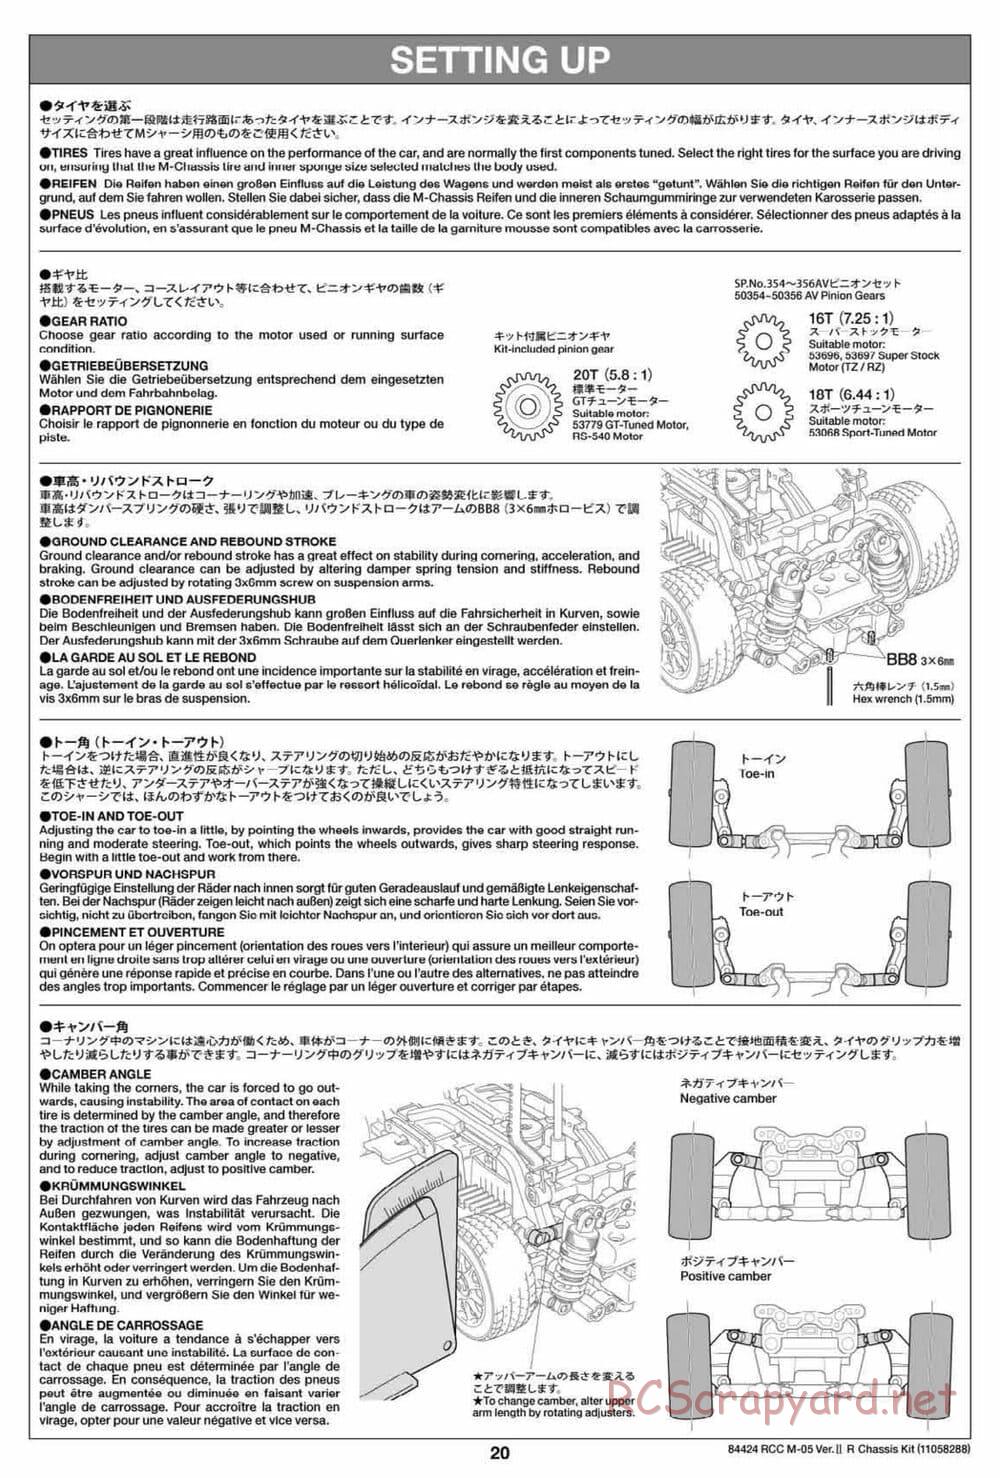 Tamiya - M-05 Ver.II R Chassis Chassis - Manual - Page 20